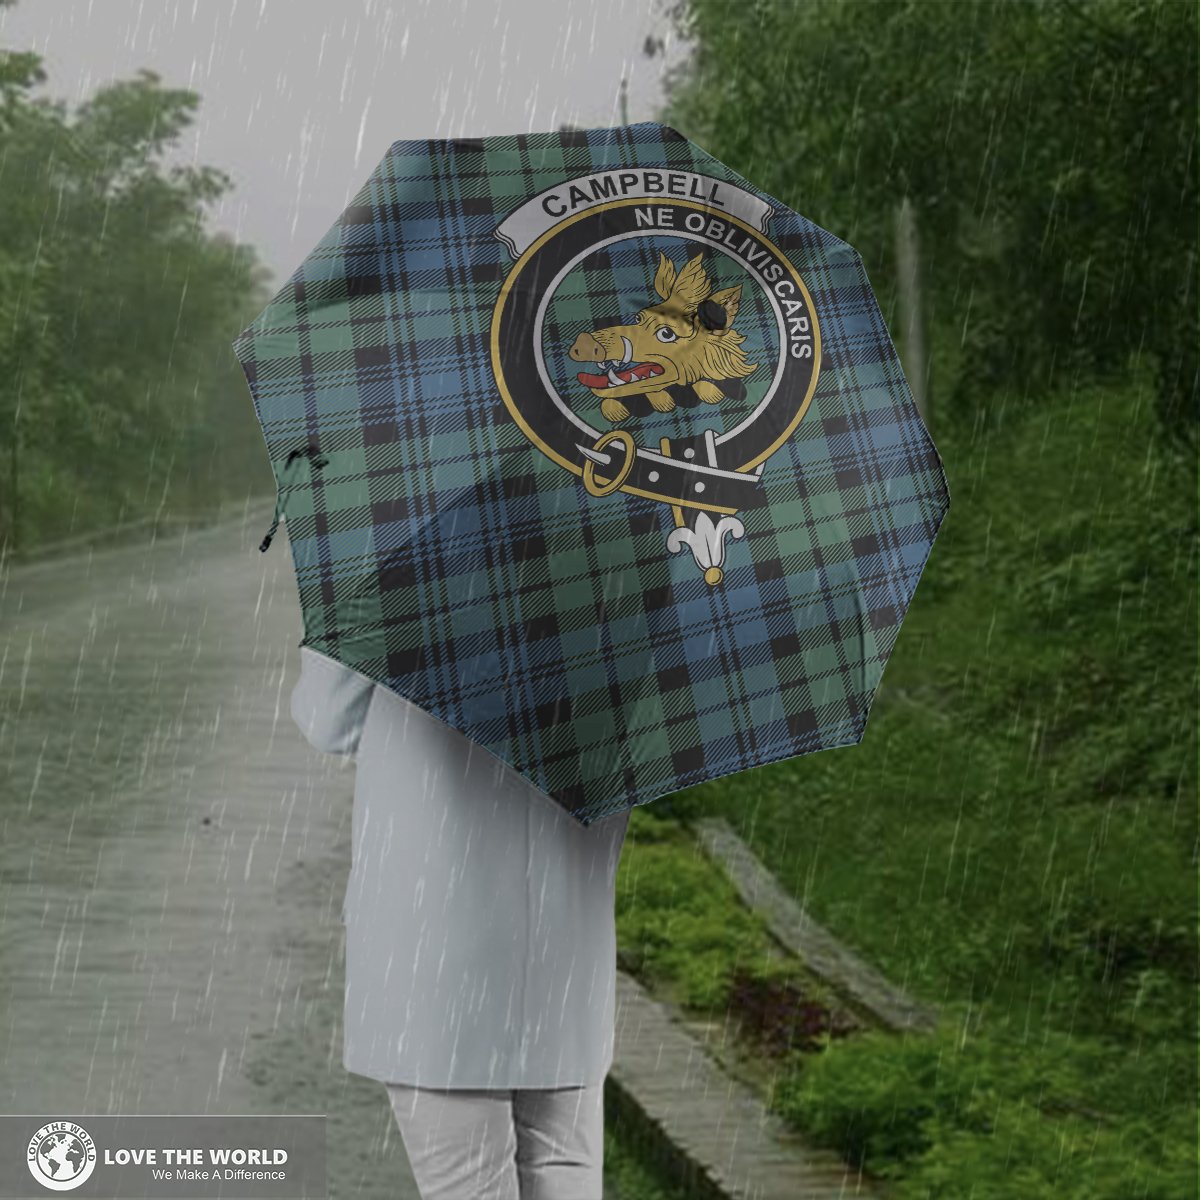 No rain, no sunlight, Tartan Umbrella will walk with you through any kind of weather 😍😍
👉 Shop Now to get 30% Off: 1sttheworld.com/collections/1s…
#Scotland #Tartan #TartanUmbrella #ScottishClans